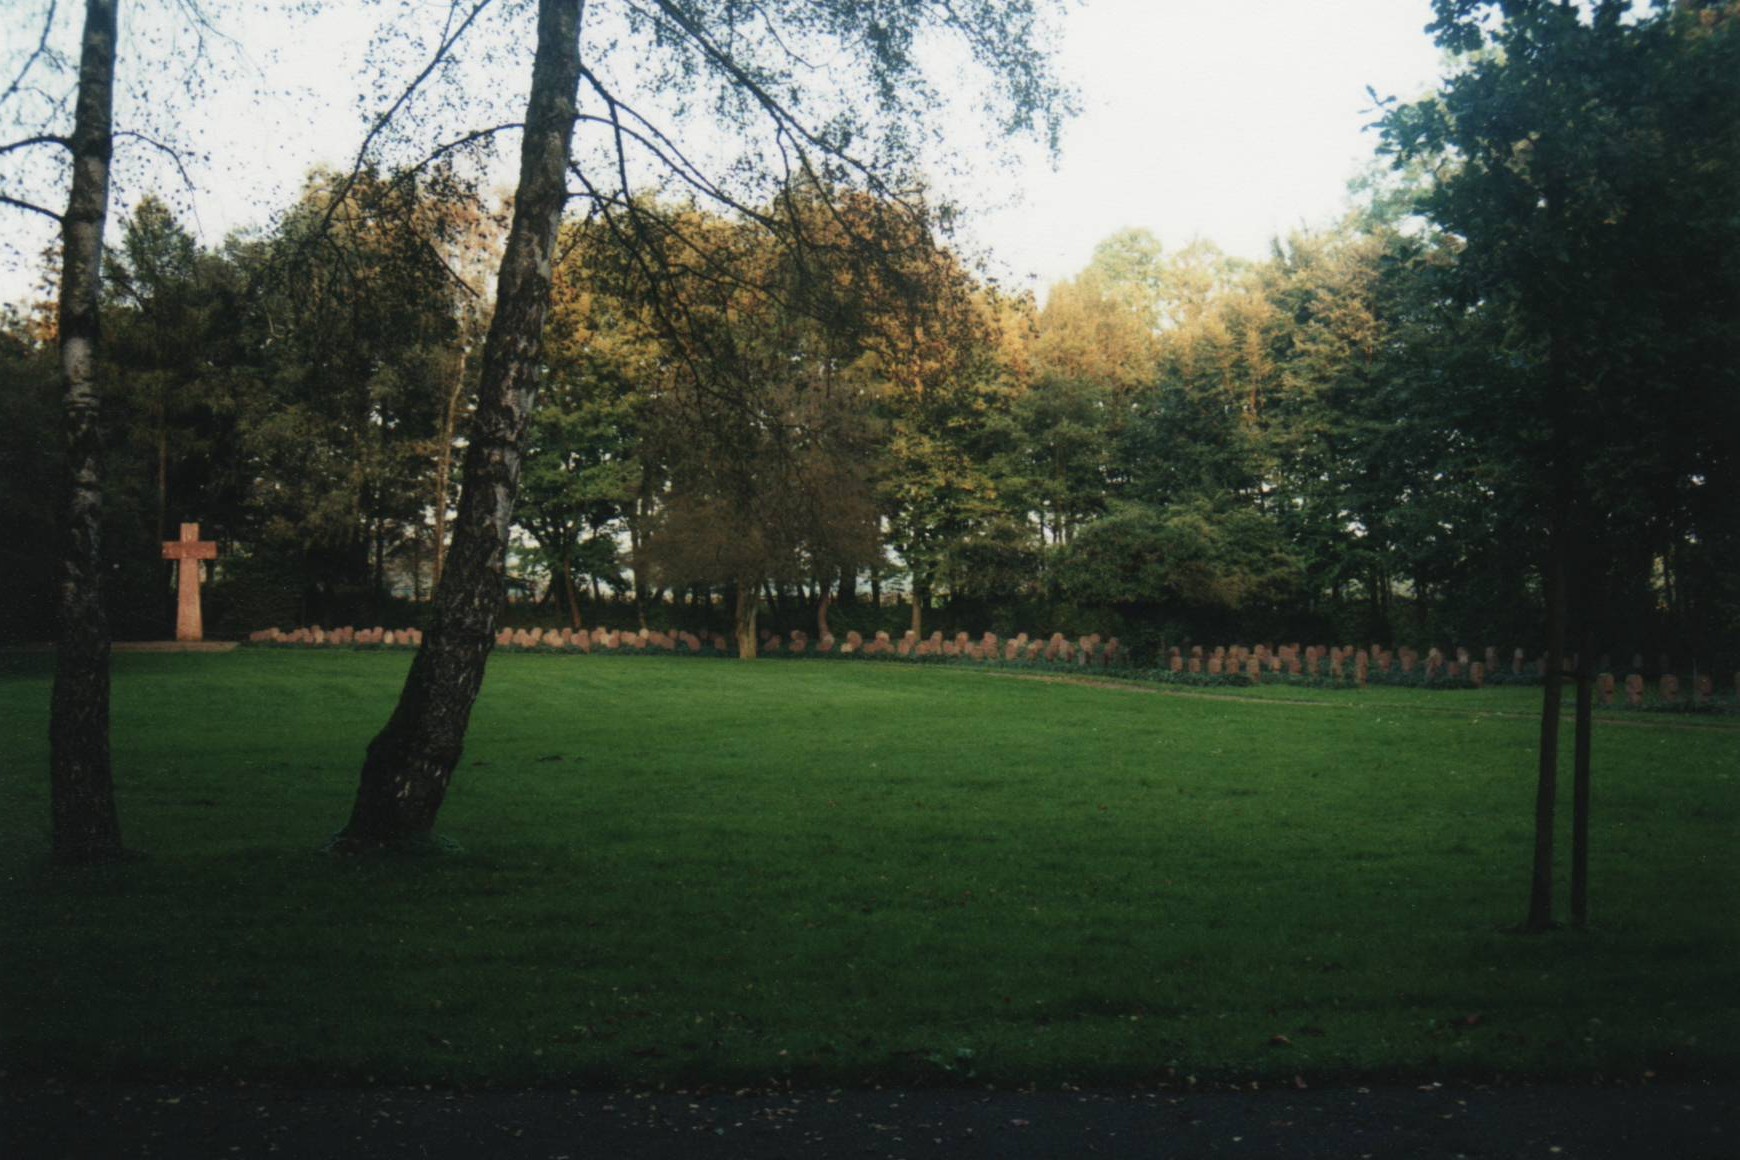 The war cemetery in Brakel